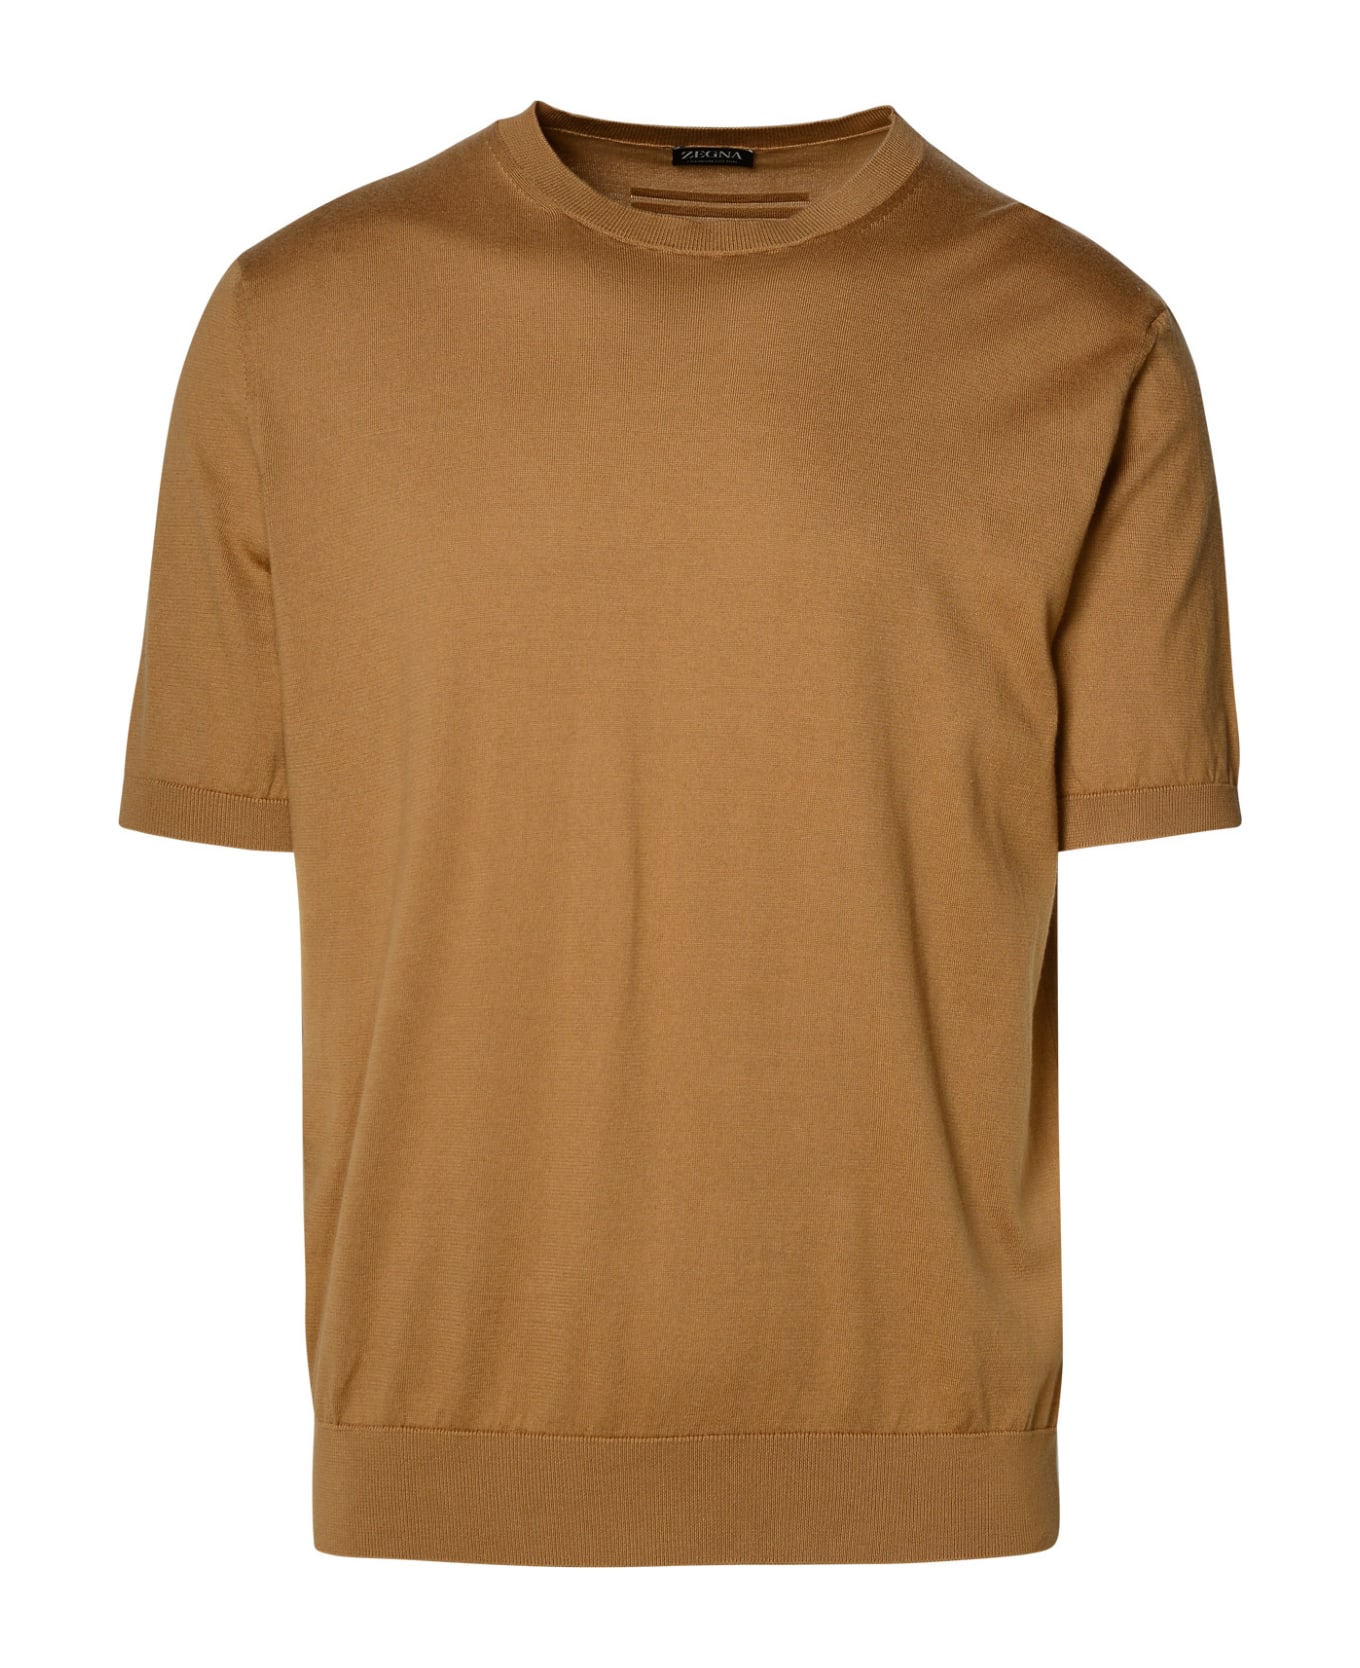 Zegna Brown Cotton T-shirt - Brown シャツ